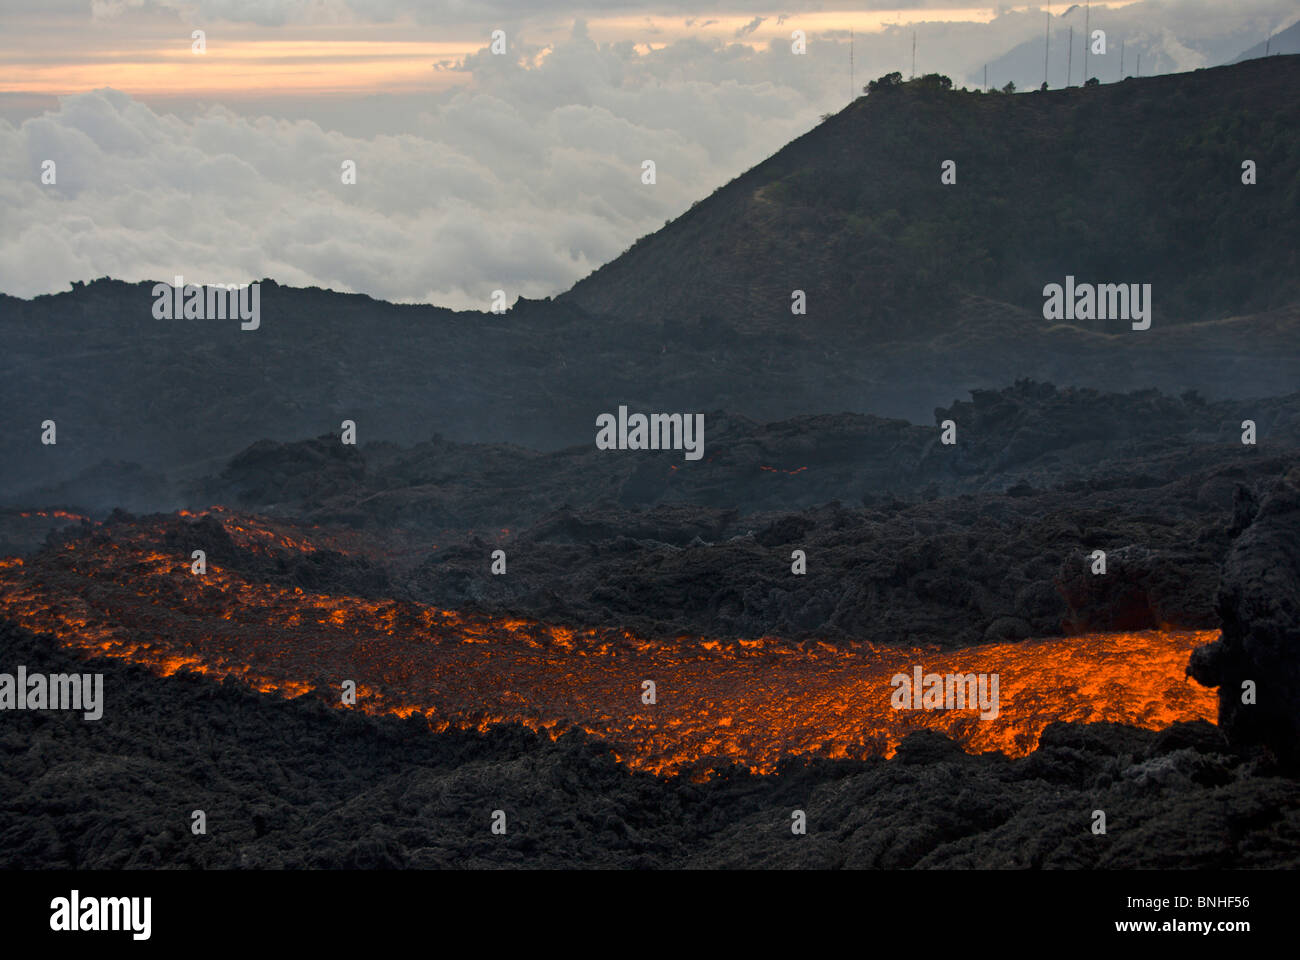 Vulkan Pacaya Aktiv Guatemala Amerika Zentralamerika 2008 Vulkanismus Vulkanisch Landschaft Berg Rauch Glühende Lava Stock Photo